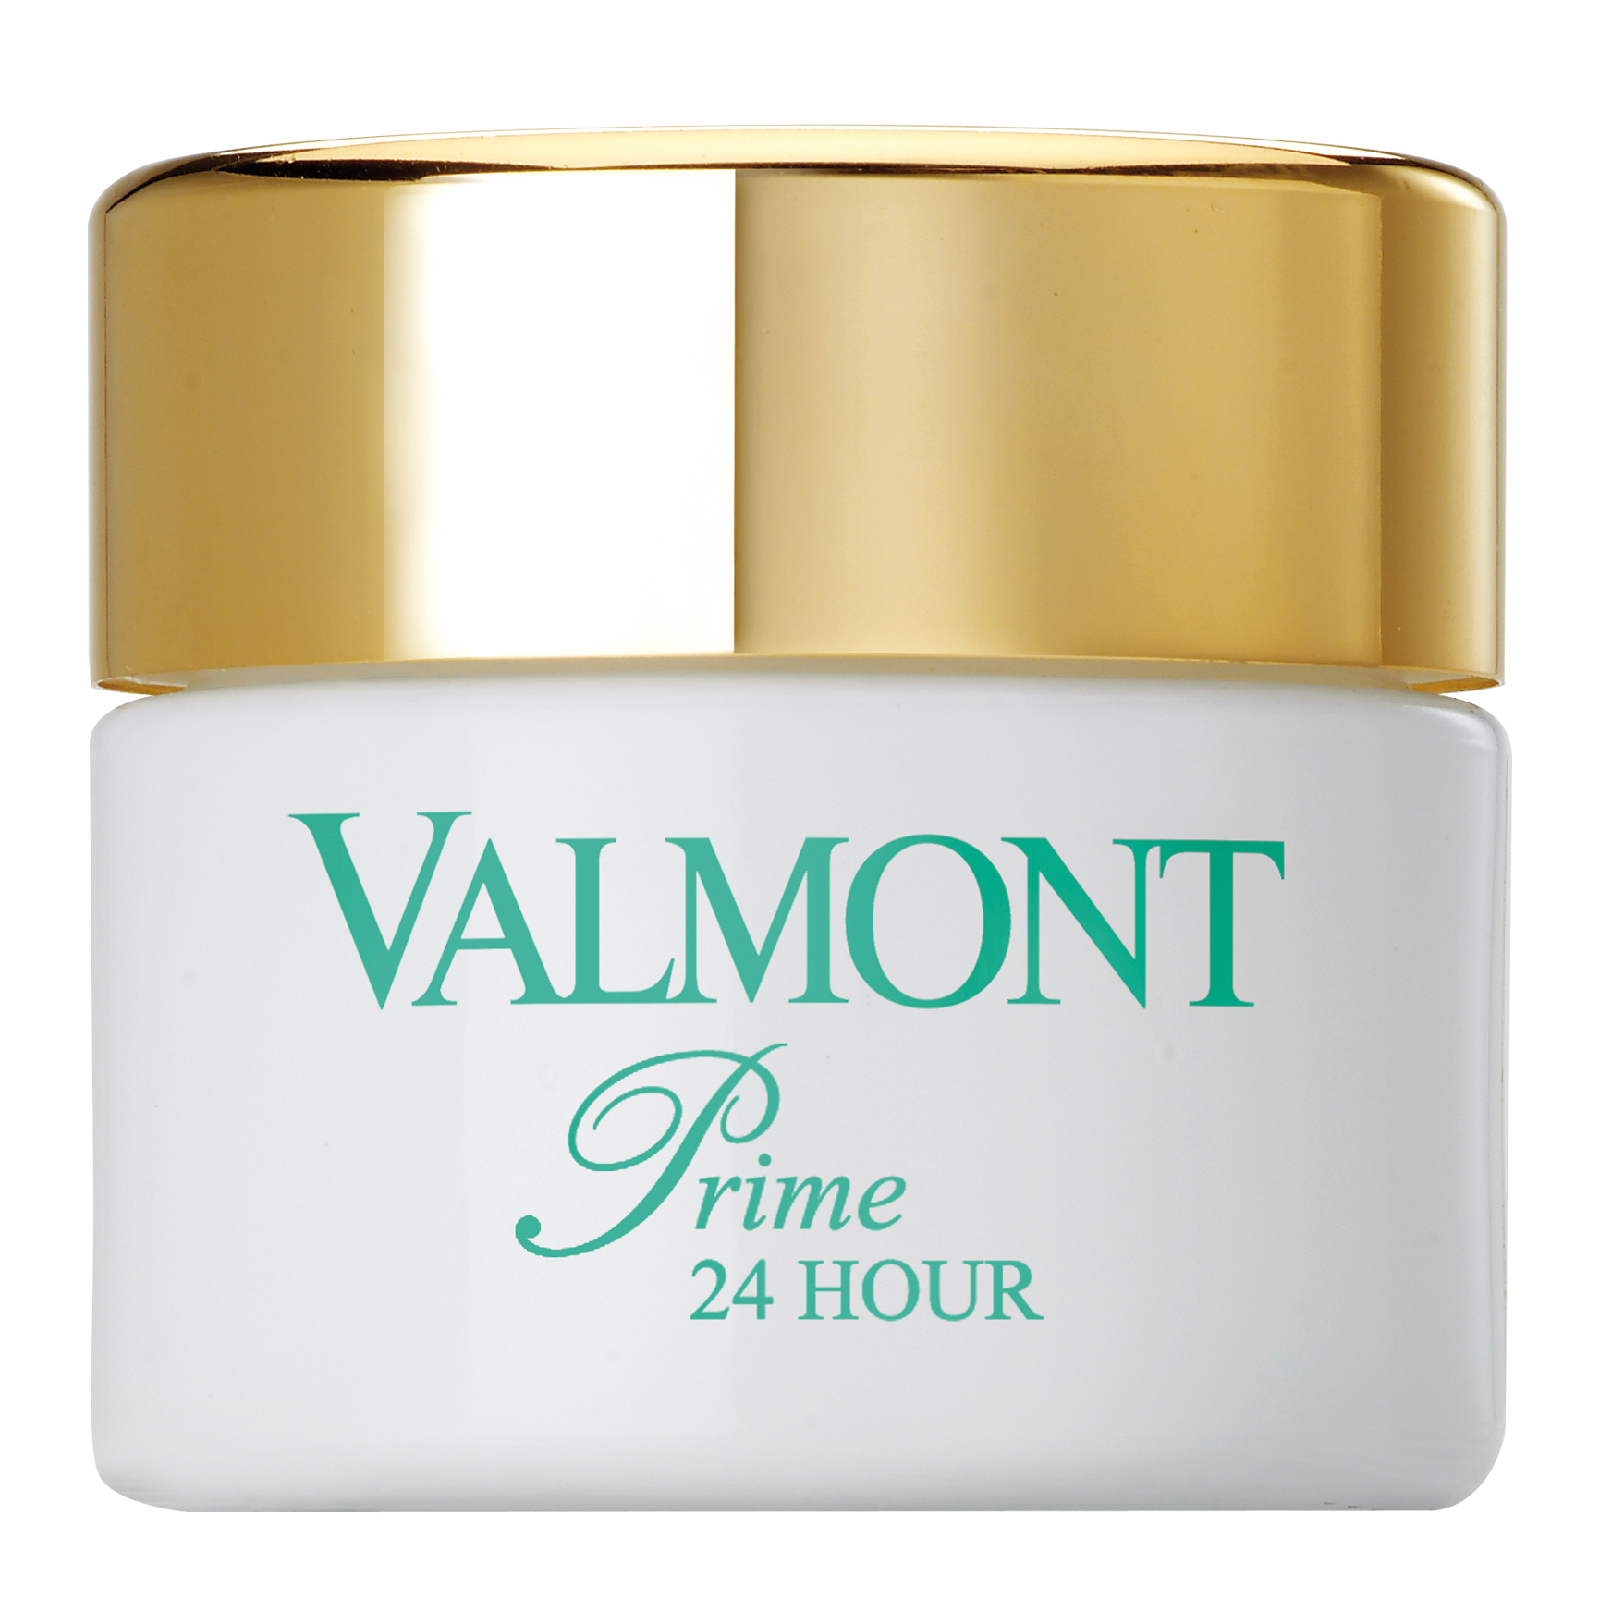 Tratamiento antienvejecimiento Prime 24 Hour de Valmont